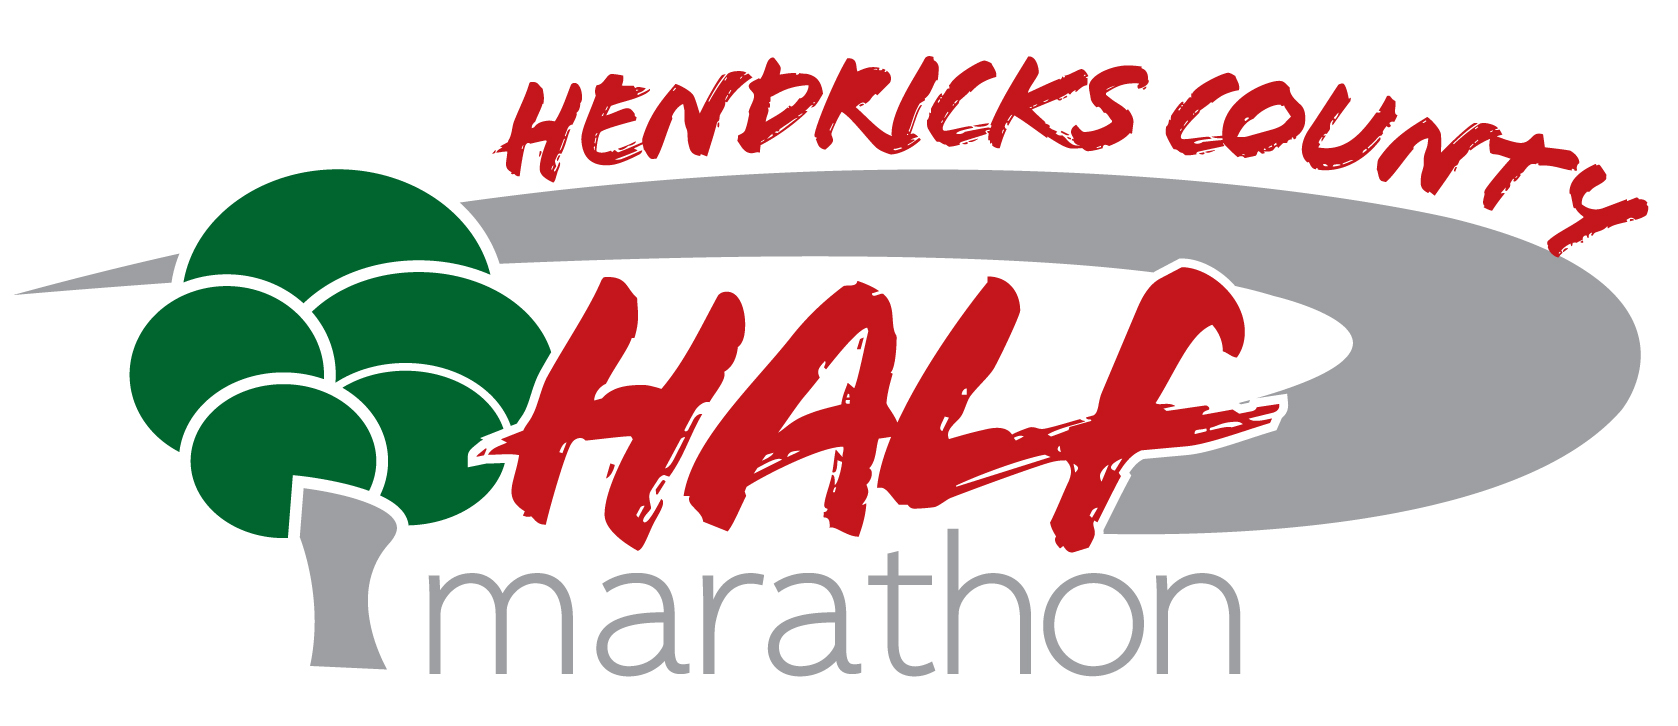 Hendricks County Half Marathon